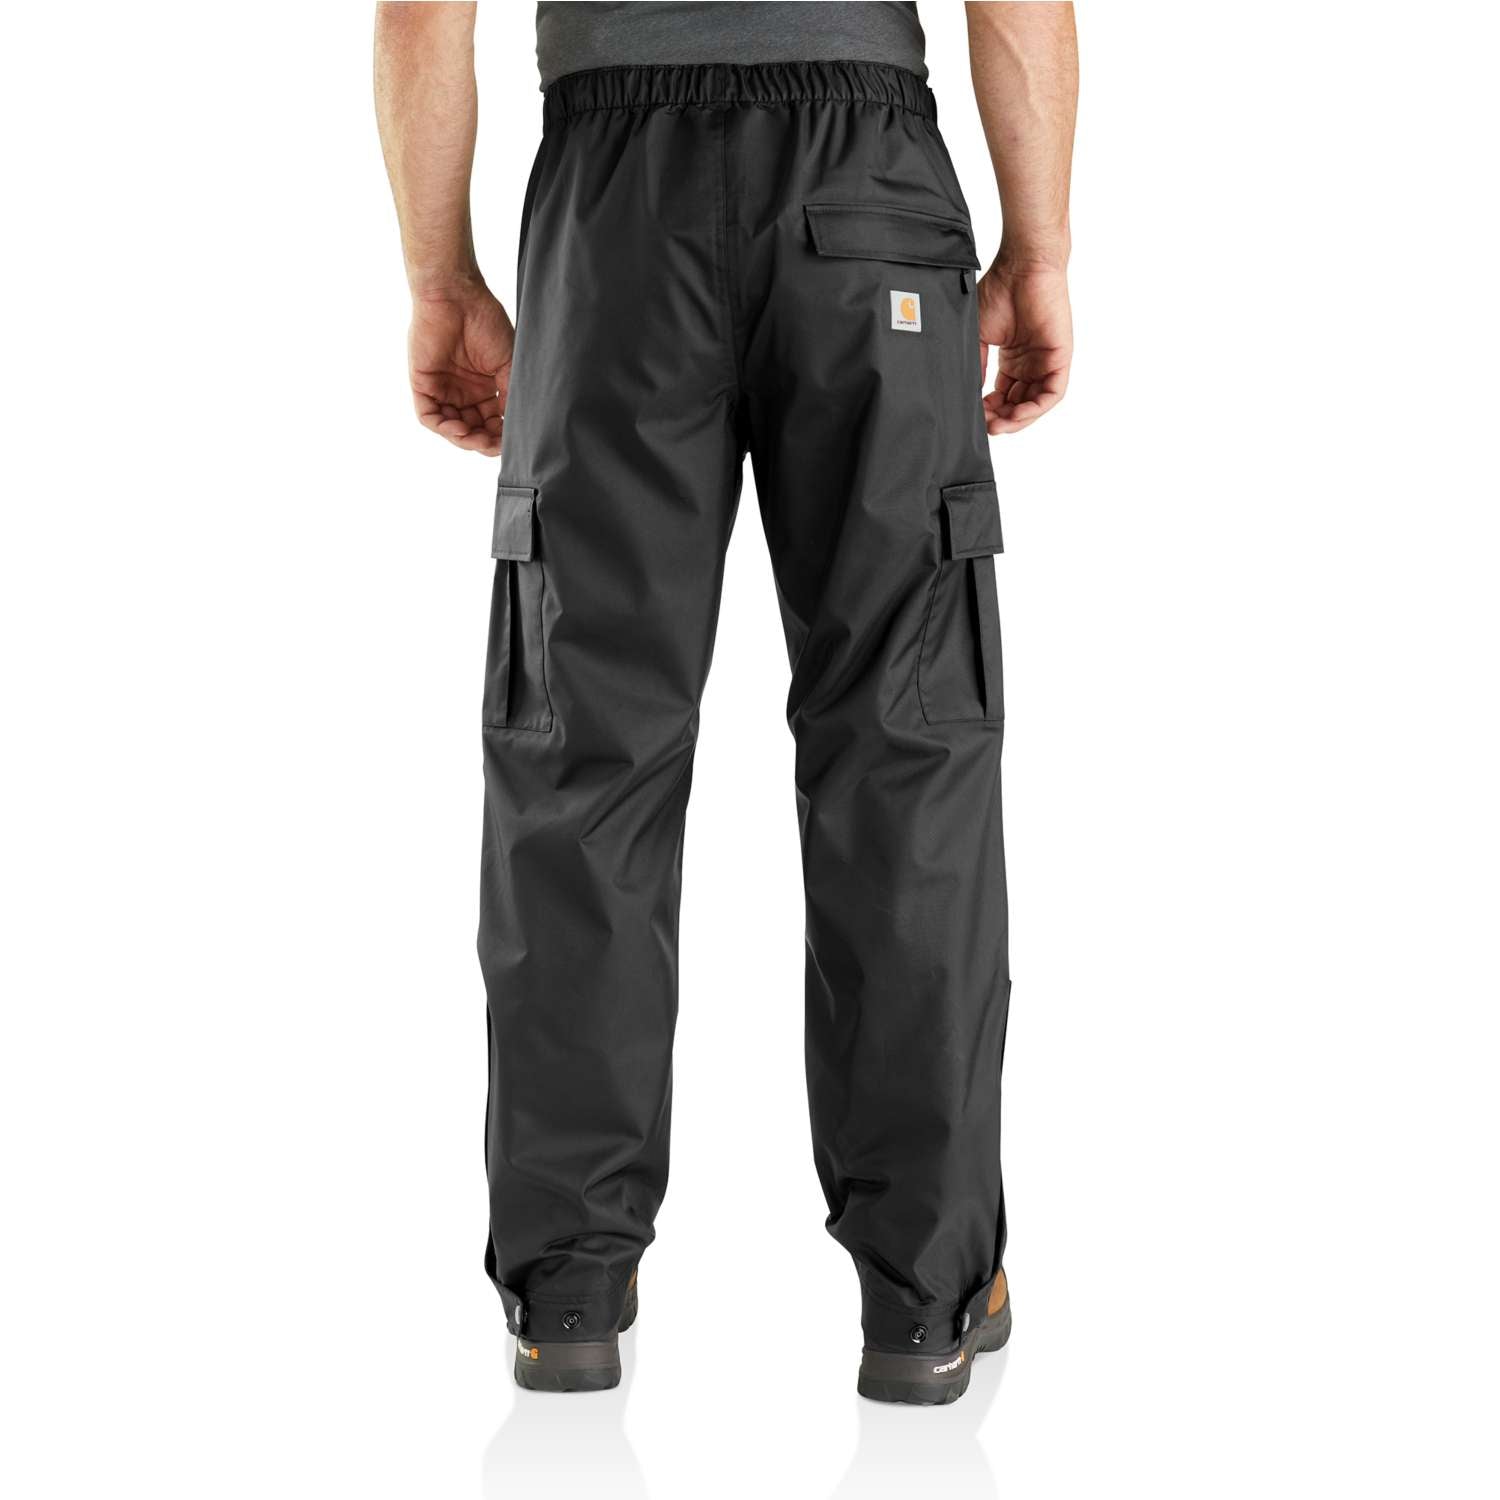 Carhartt Men's Medium Black Nylon Dry Harbor Pant 103507-001 - The